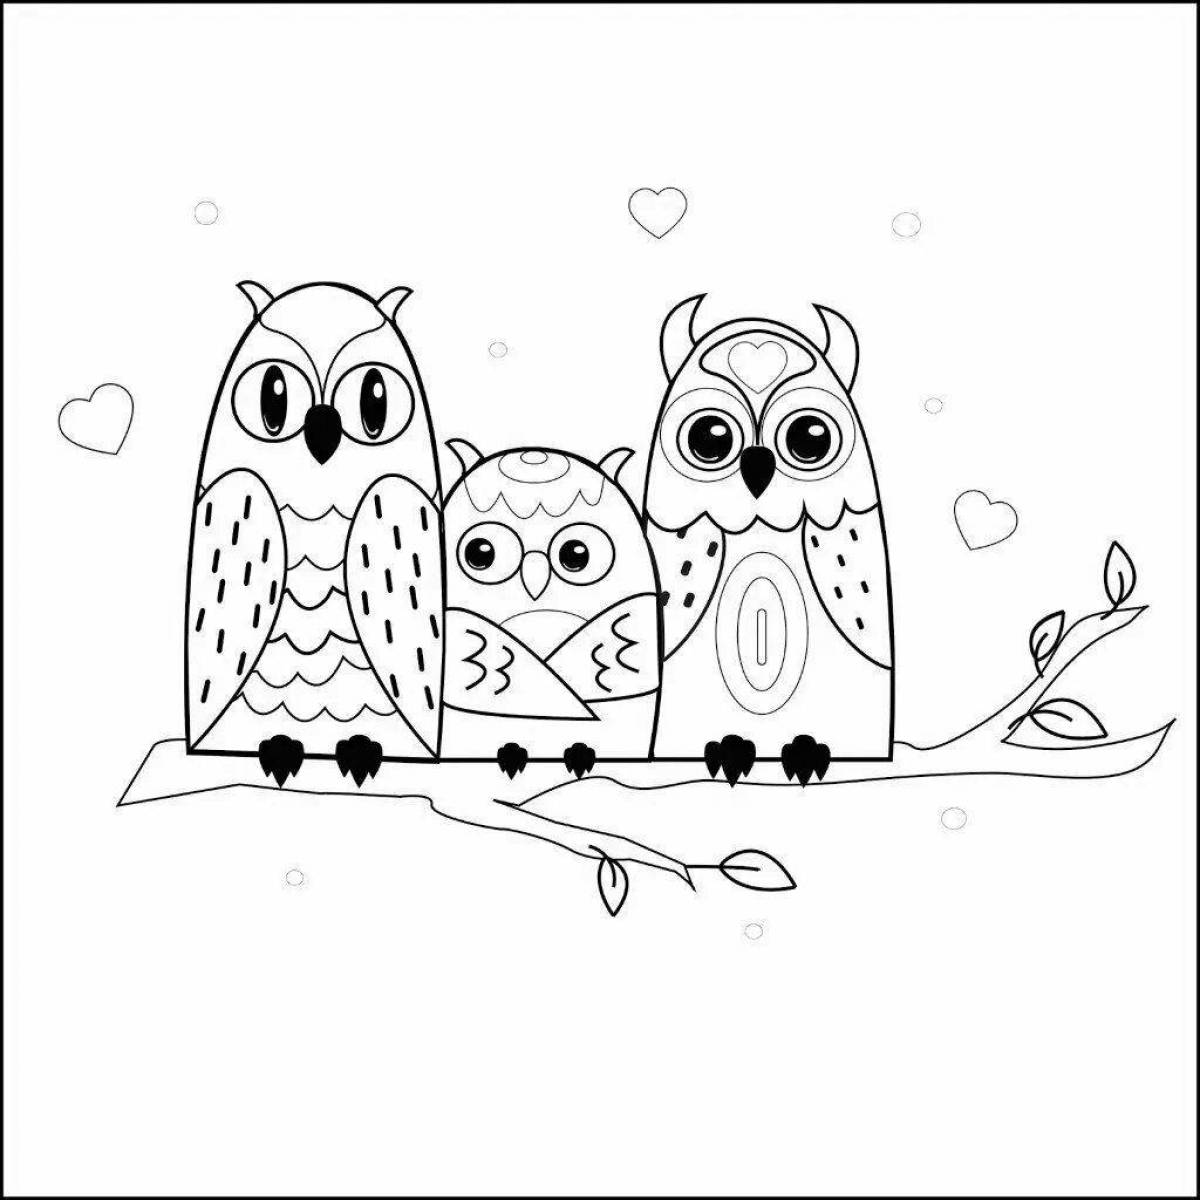 Playful cute owl coloring book